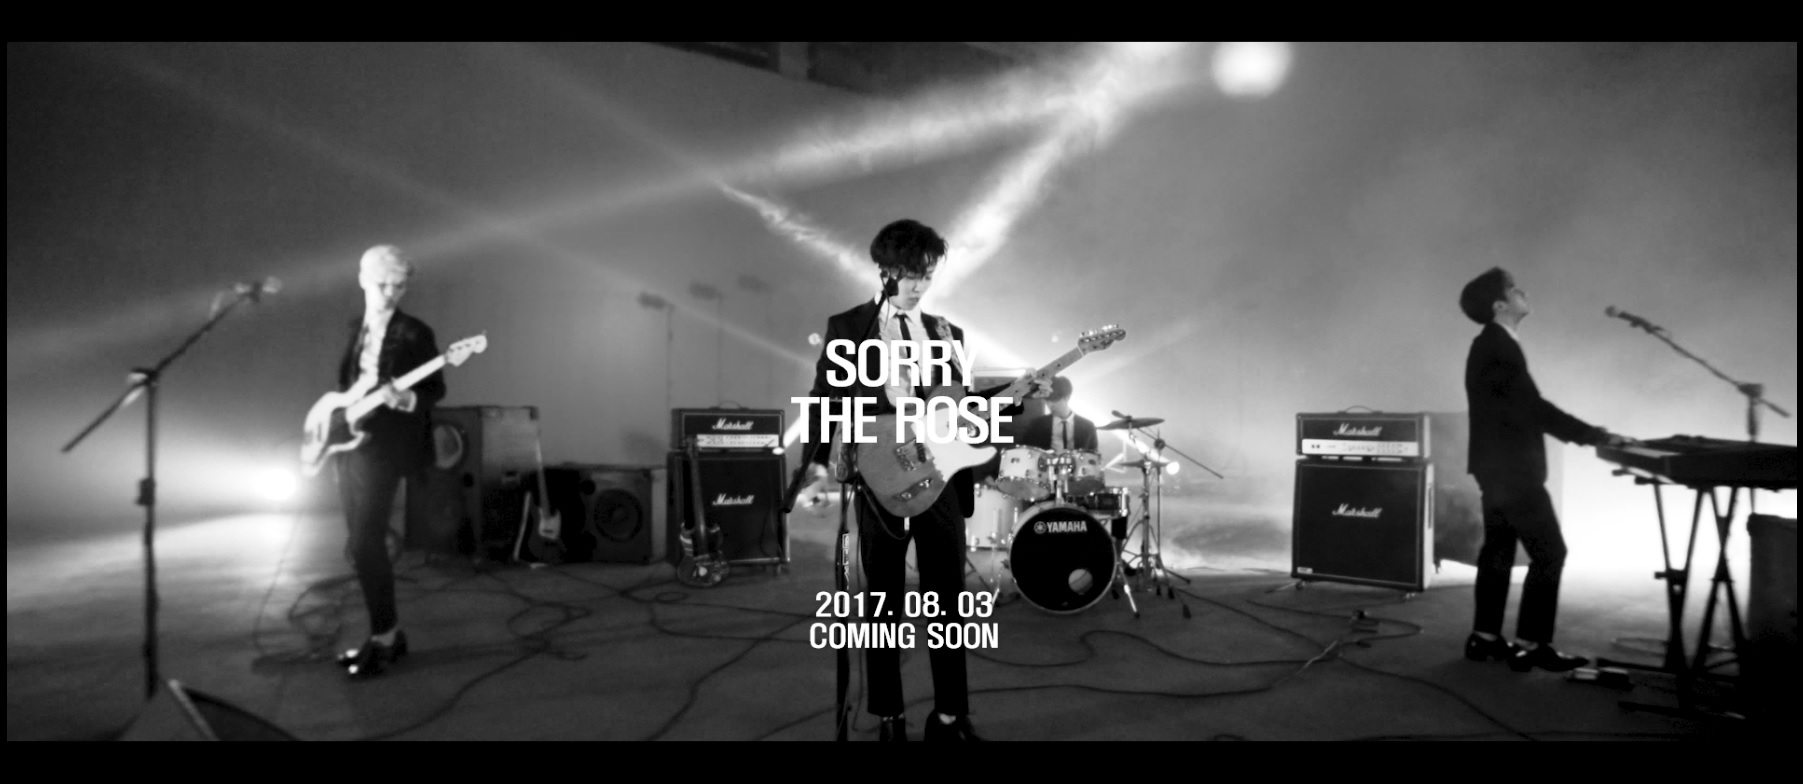 The Rose 1st Single 'sorry' Teaser